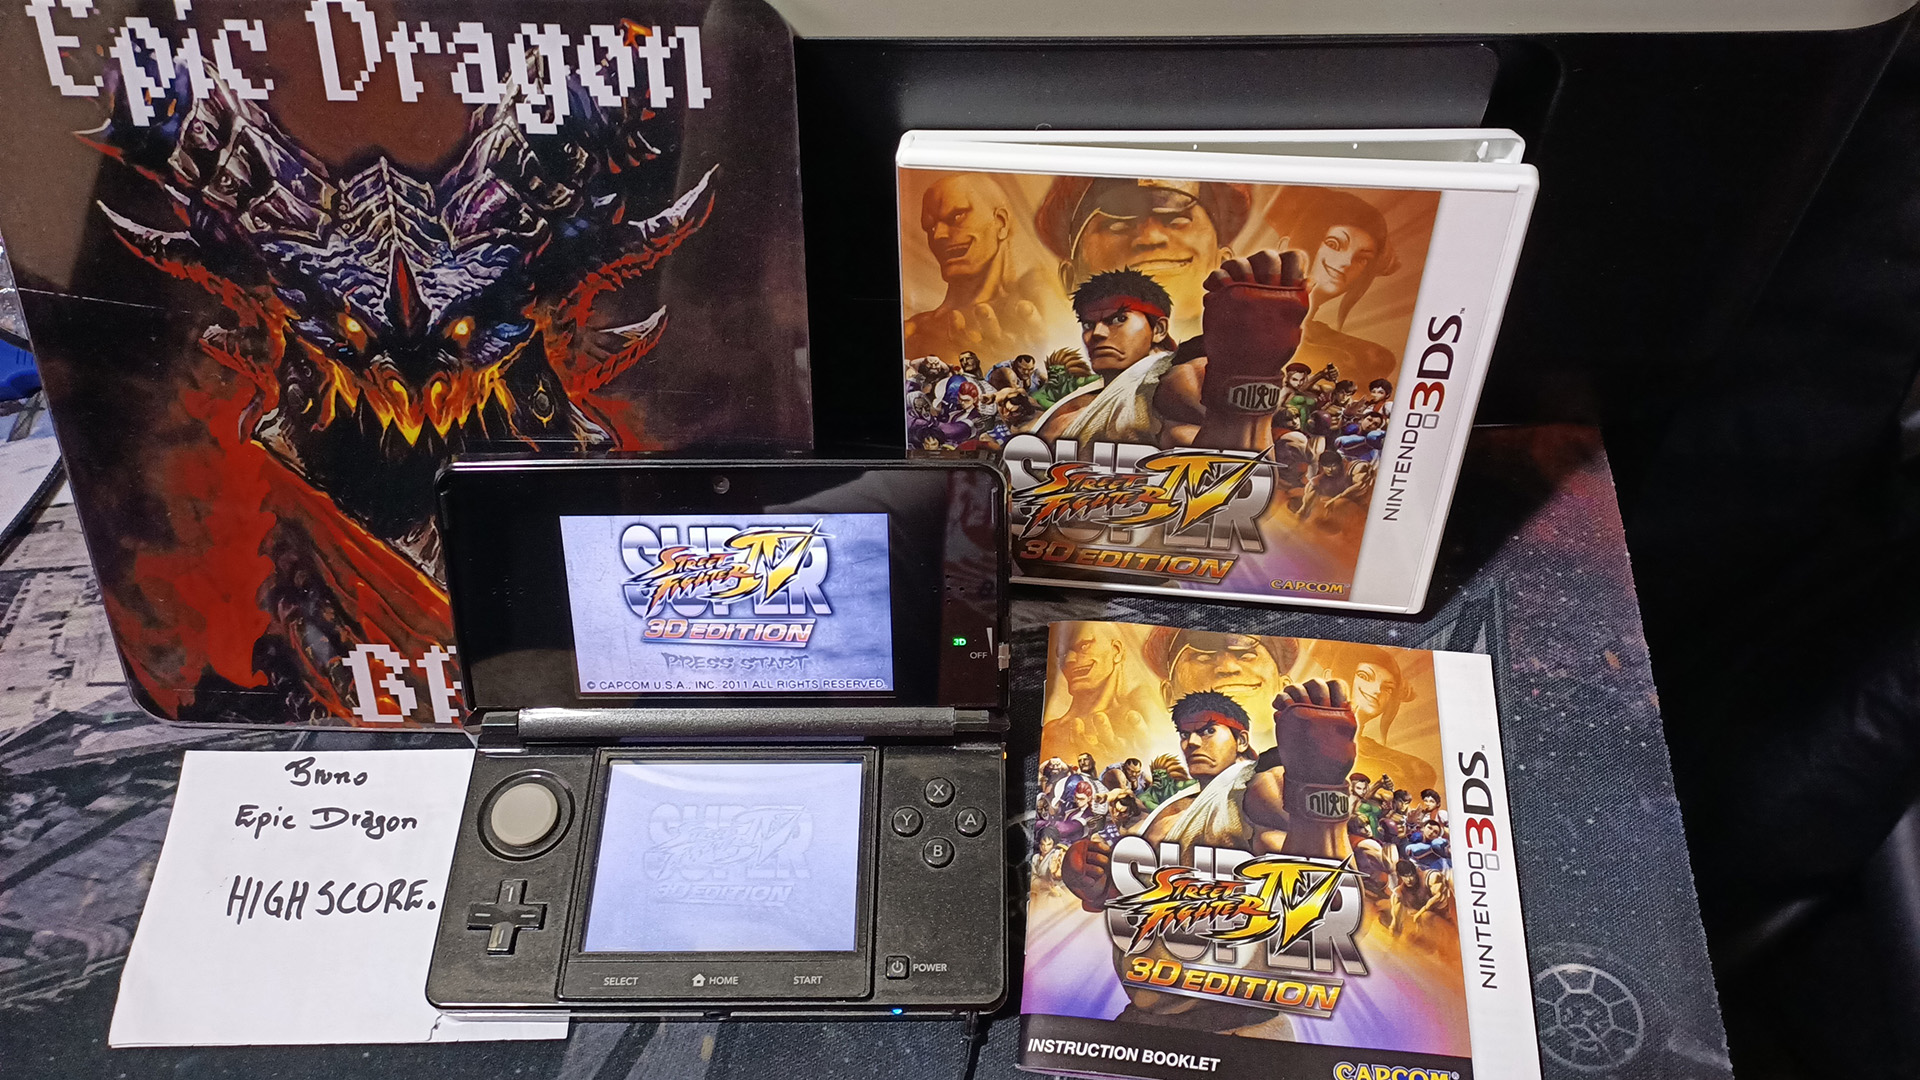 EpicDragon: Super Street Fighter IV 3D Edition: Arcade: Gen (Nintendo 3DS) 1,495,600 points on 2022-08-05 17:53:06